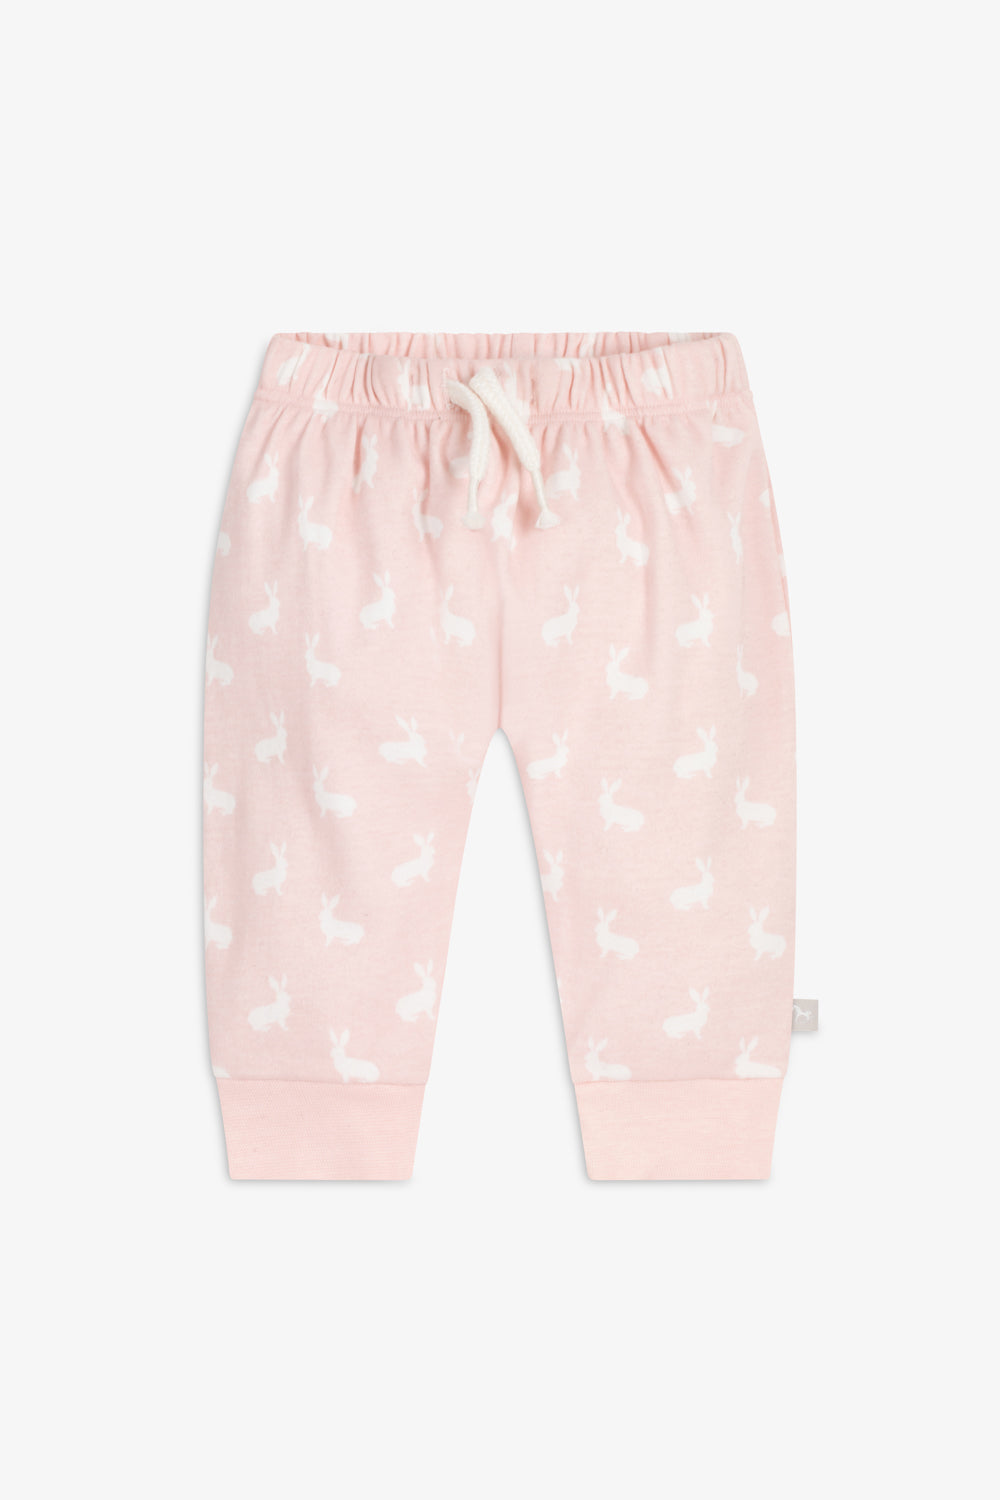 Top and Pants Set, rose pink hare print